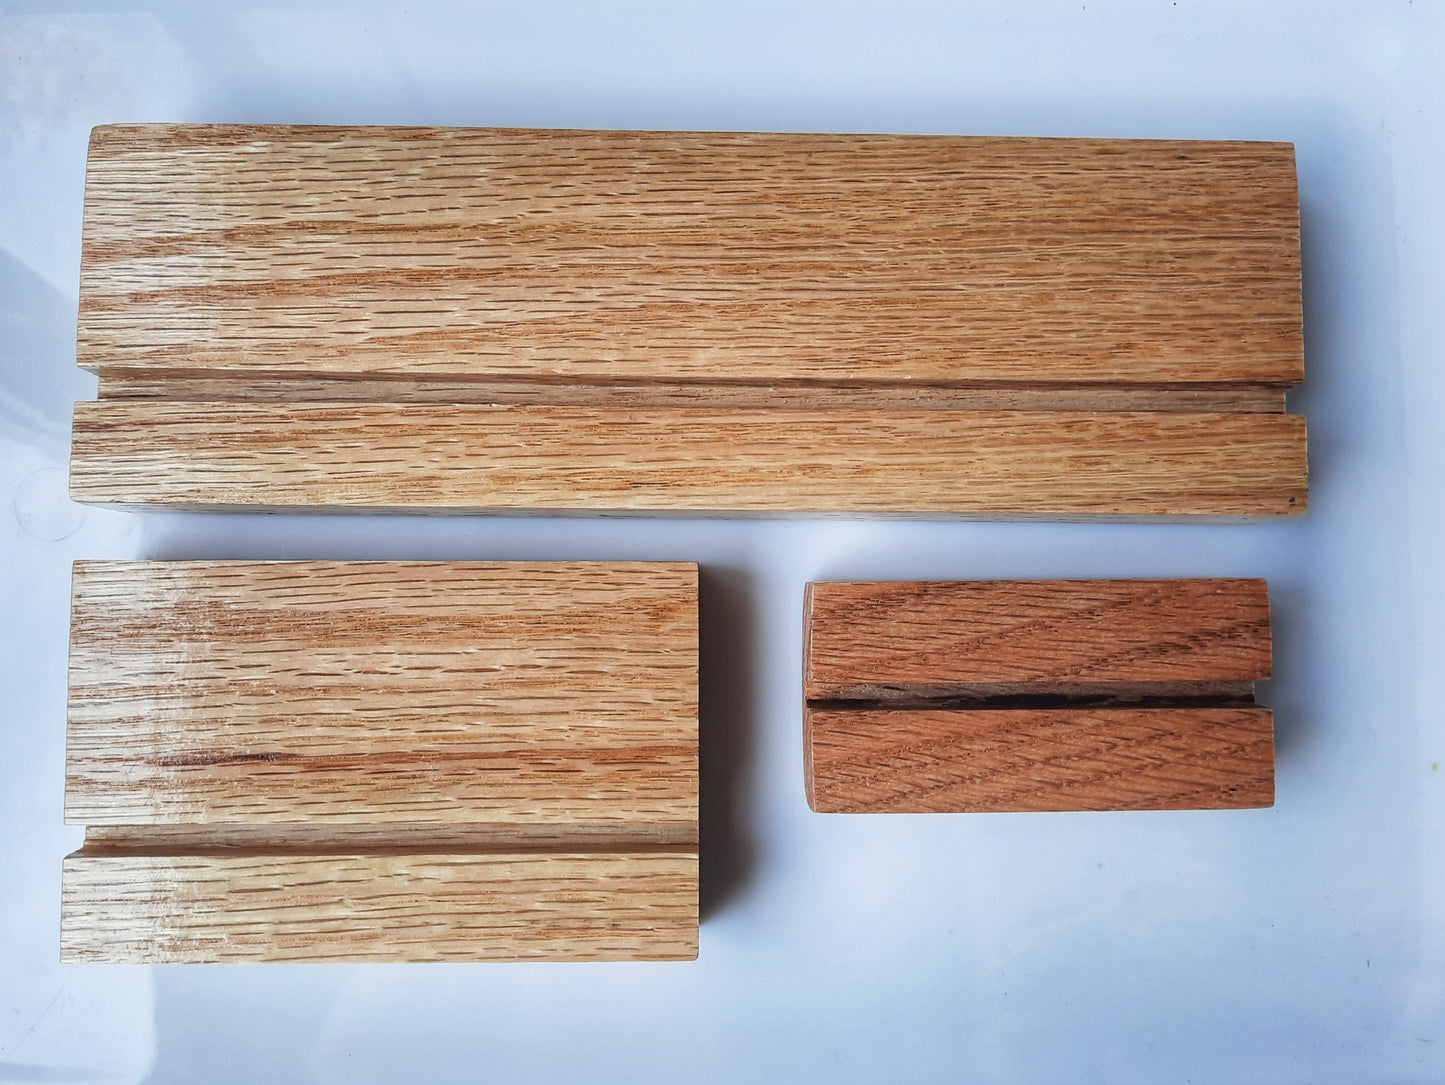 Solid Red Oak wood display blocks (only)